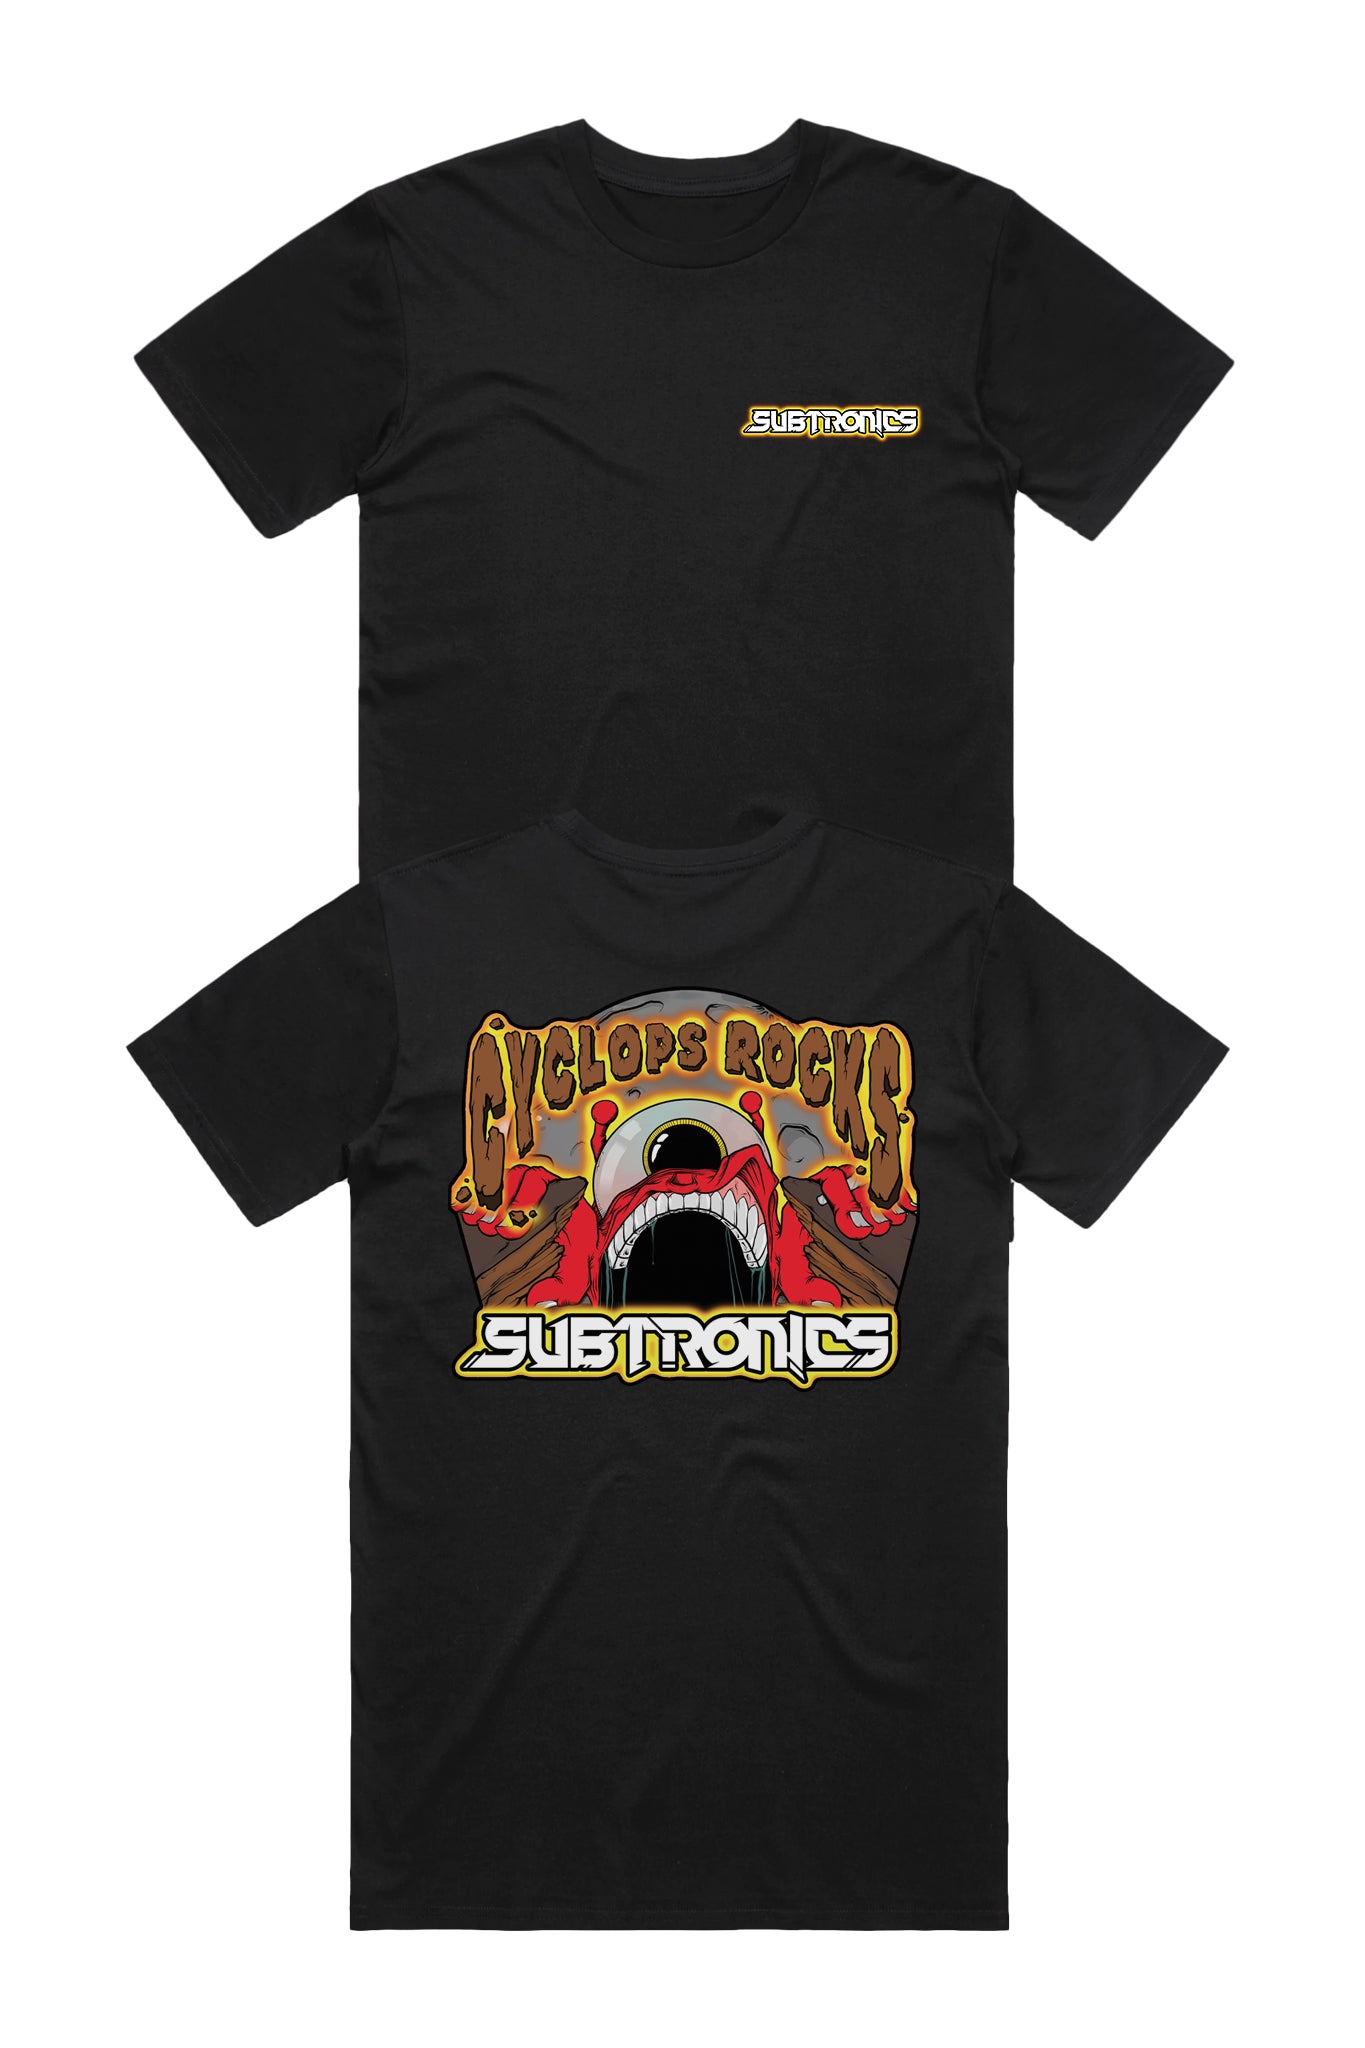 Subtronics - Cyclops Rocks - Black Unisex Tee